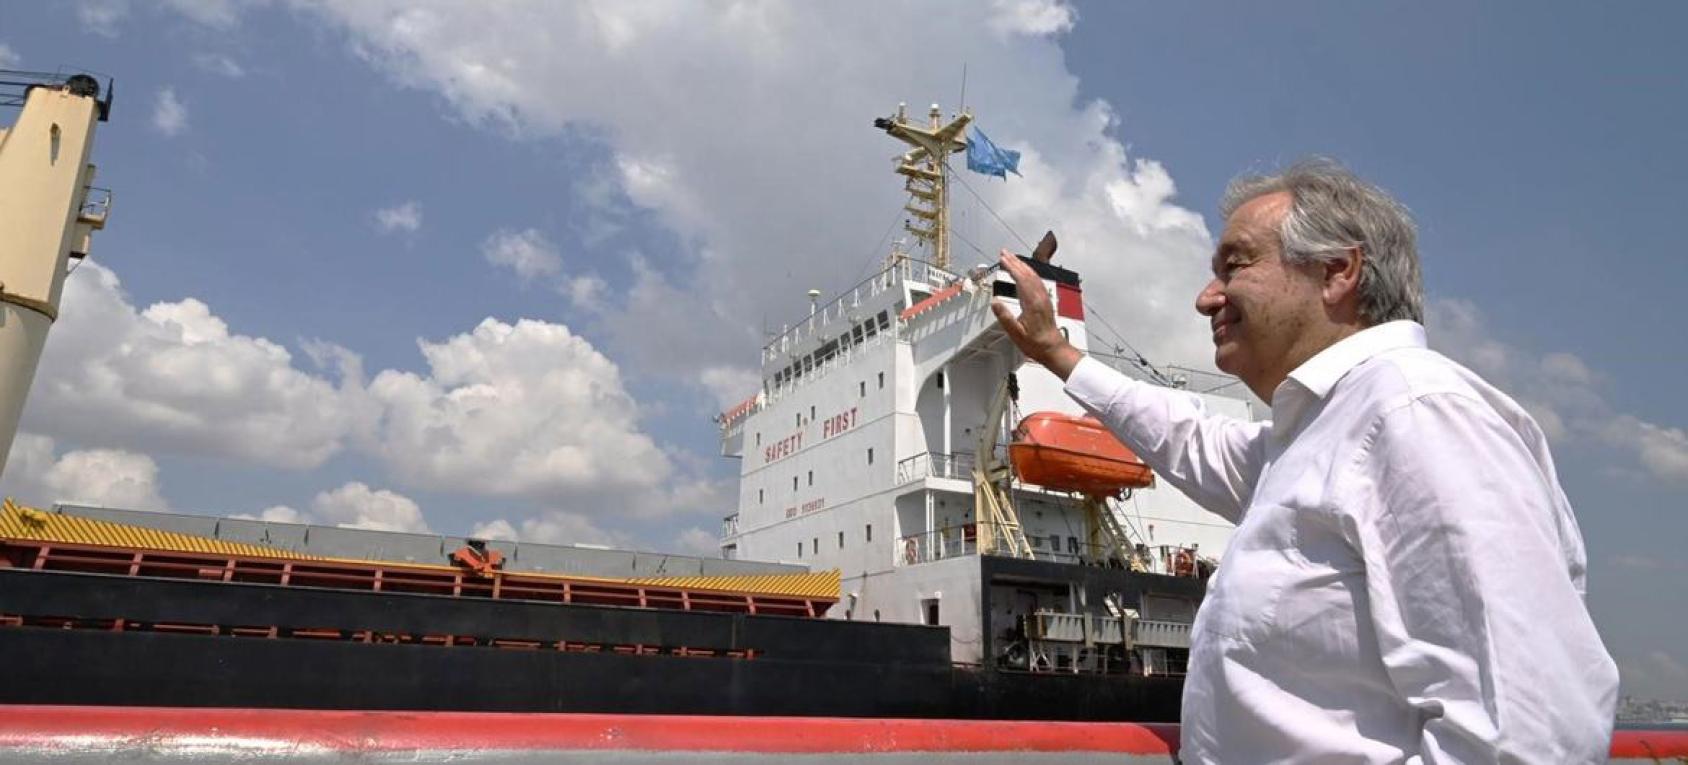 Un Secretary Genaral pointing at the ship carrying grain.